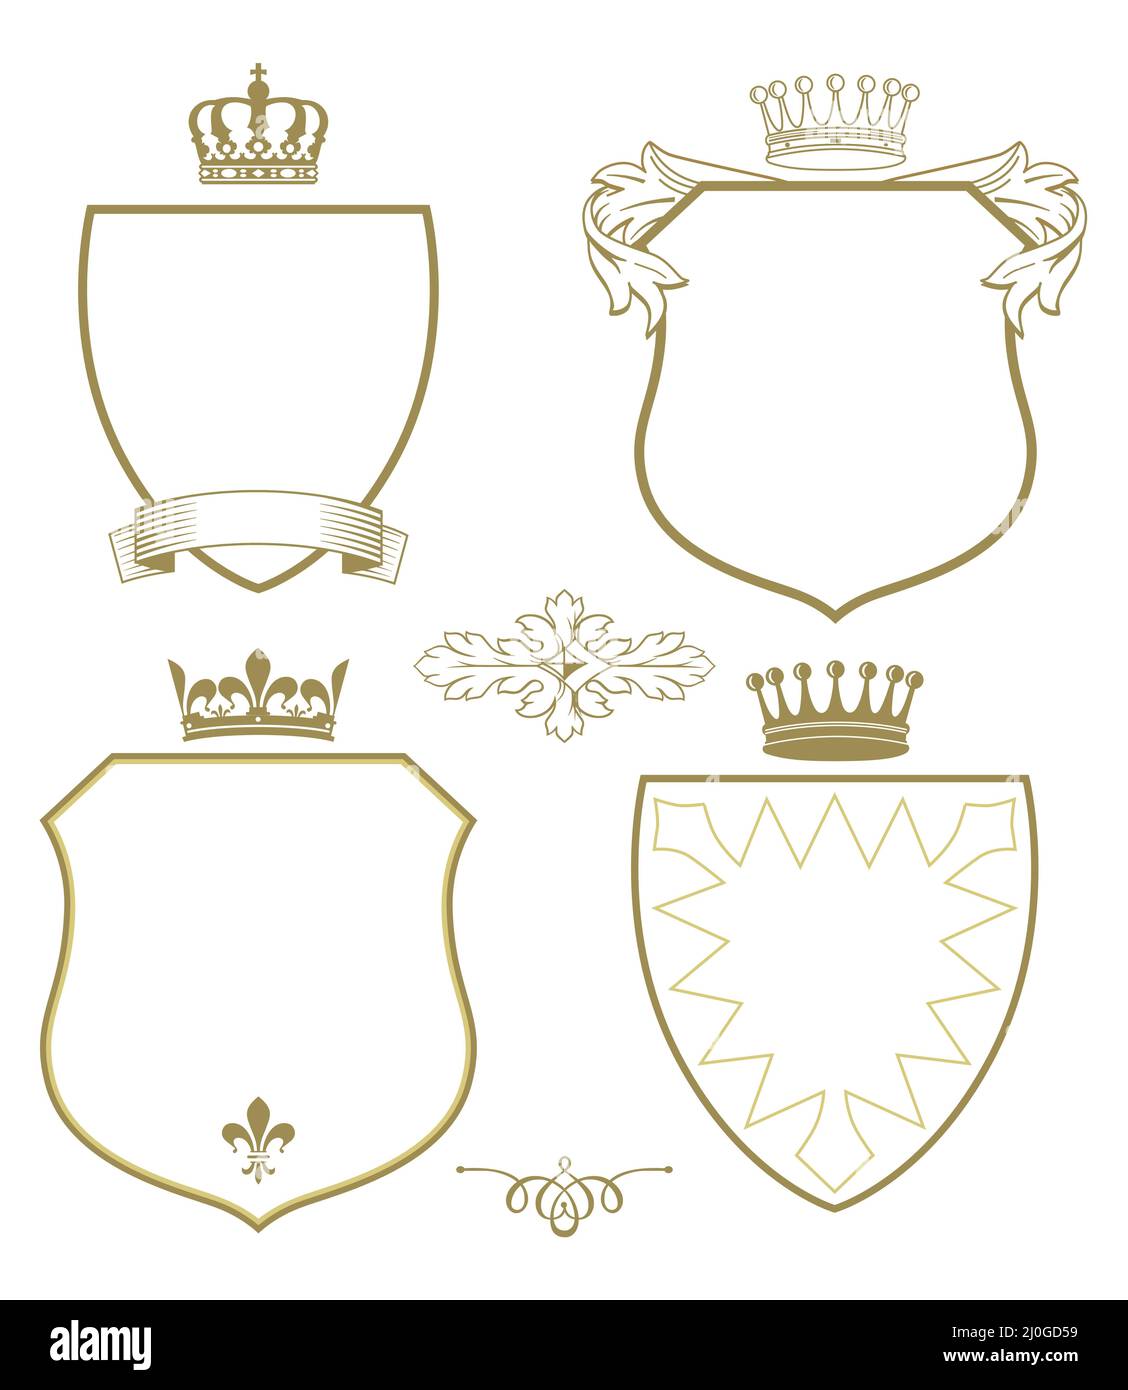 Escudo De Armas Con Escudos Y Coronas Aisladas Sobre Fondo Blanco